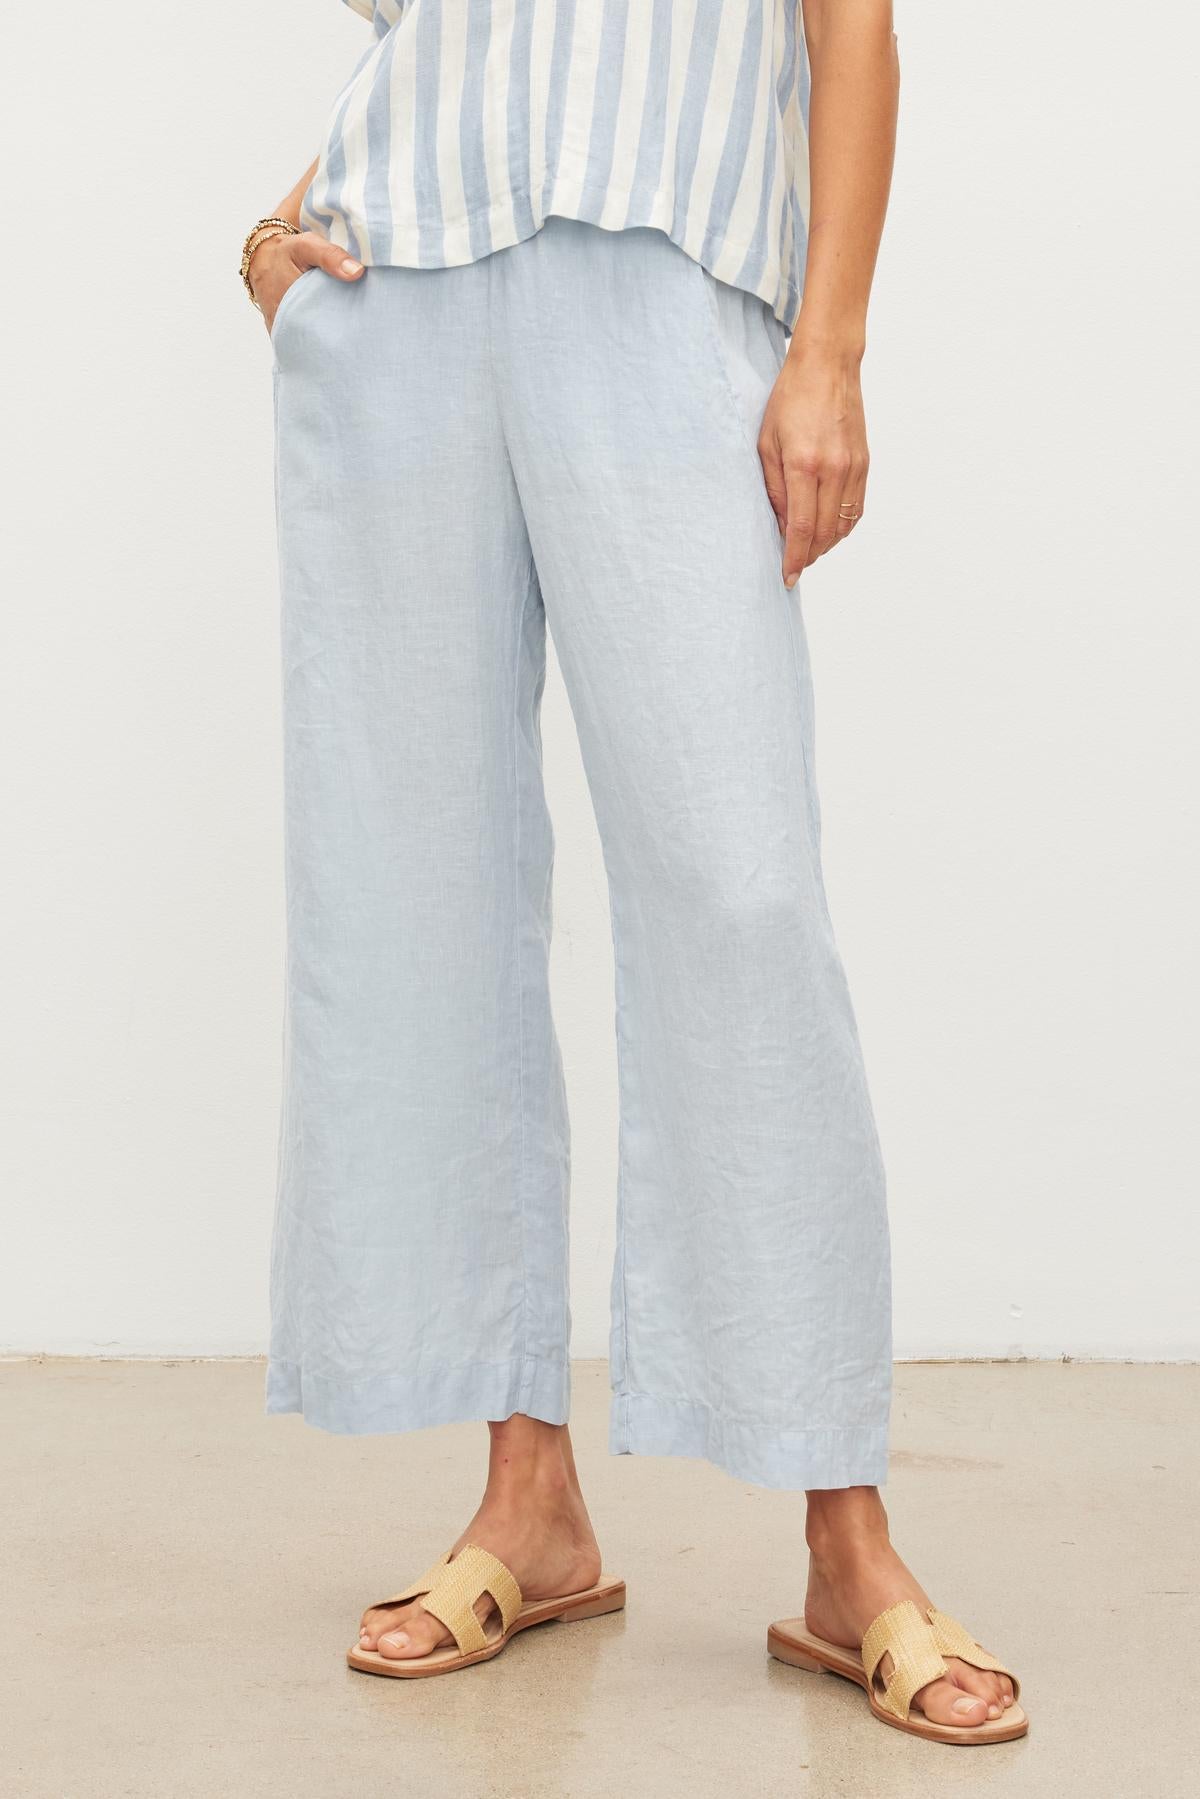 A woman wearing Velvet by Graham & Spencer's LOLA LINEN PANT with an elastic waist and lightweight linen woven fabric.-36002577514689